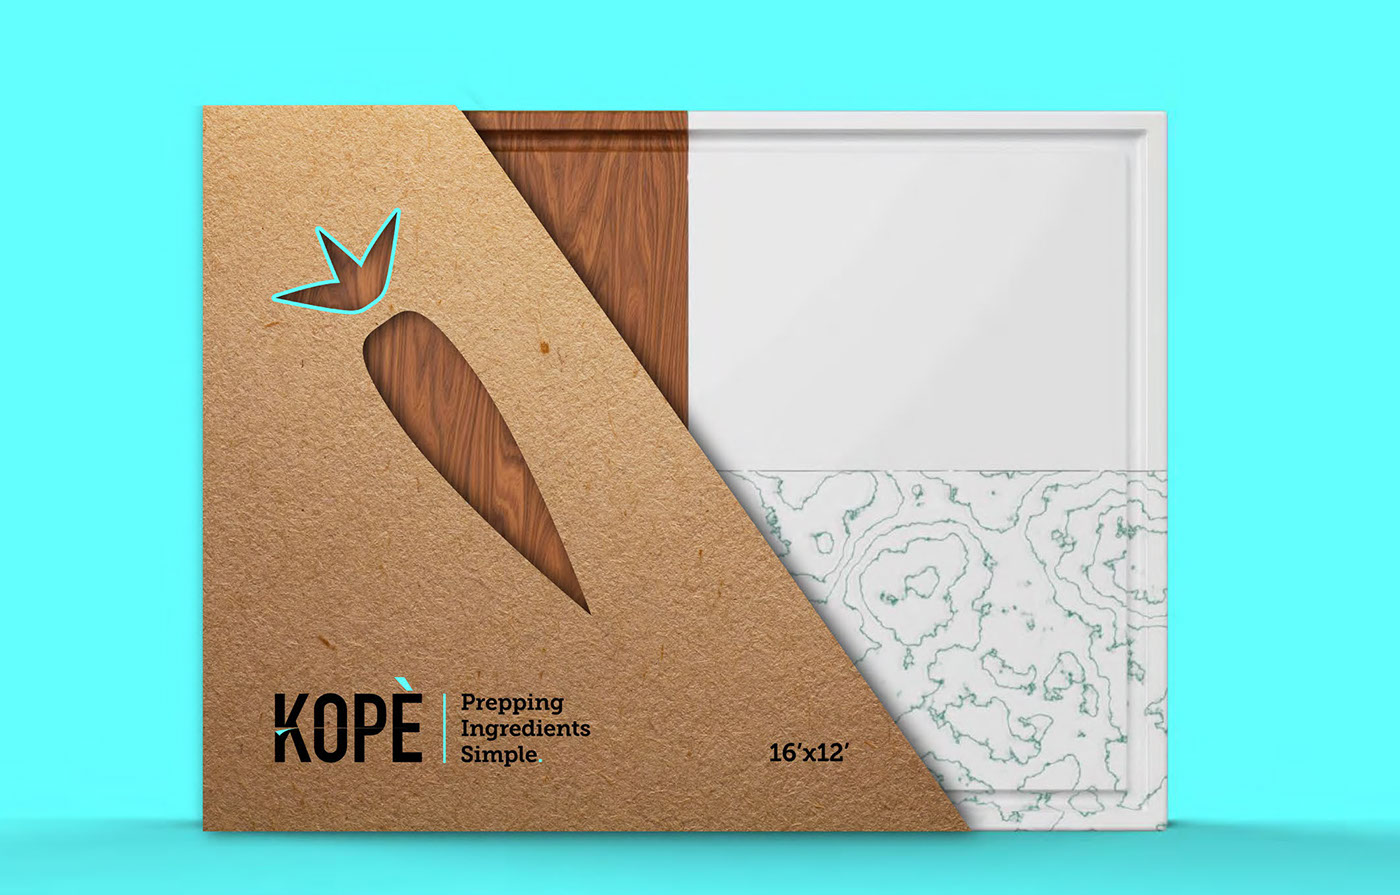 industrial design  design packaging design Sustainable KITCHENWARE cutting board KOPE   graphic design  branding  minimalist